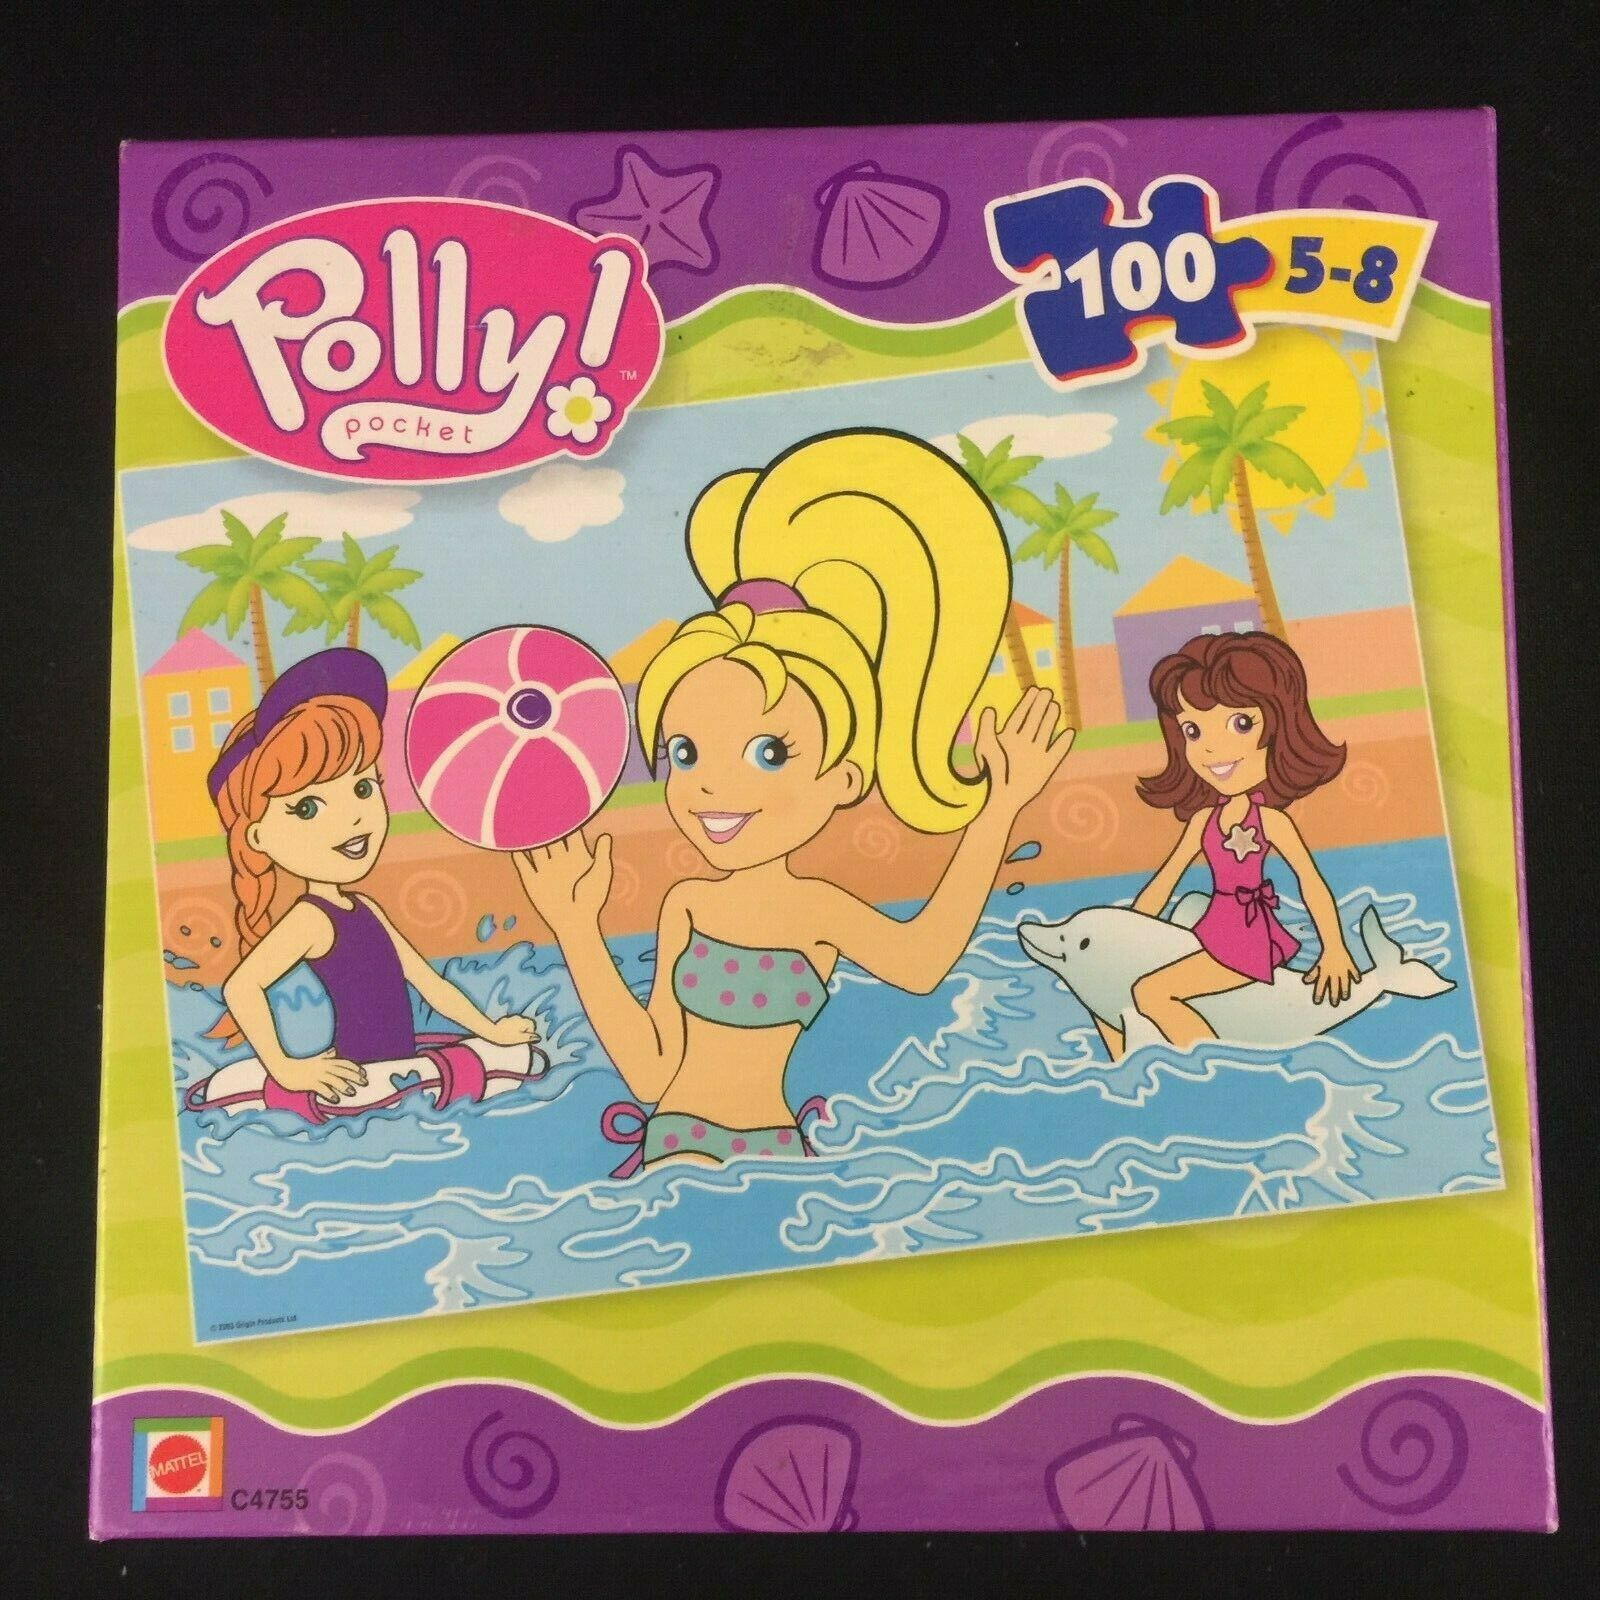 Polly Pocket puzzles & jigsaw